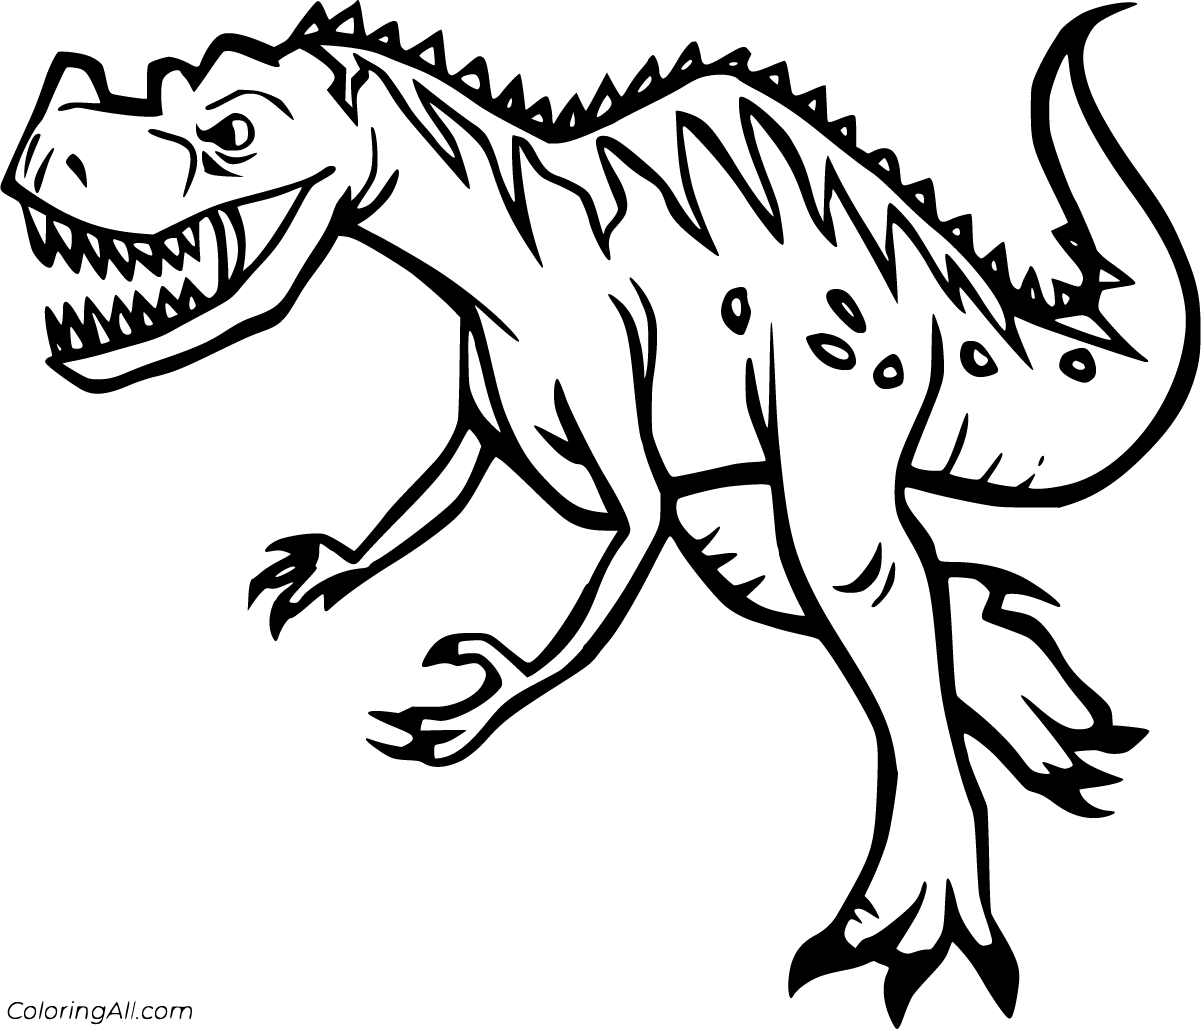 Цератозавр раскраска